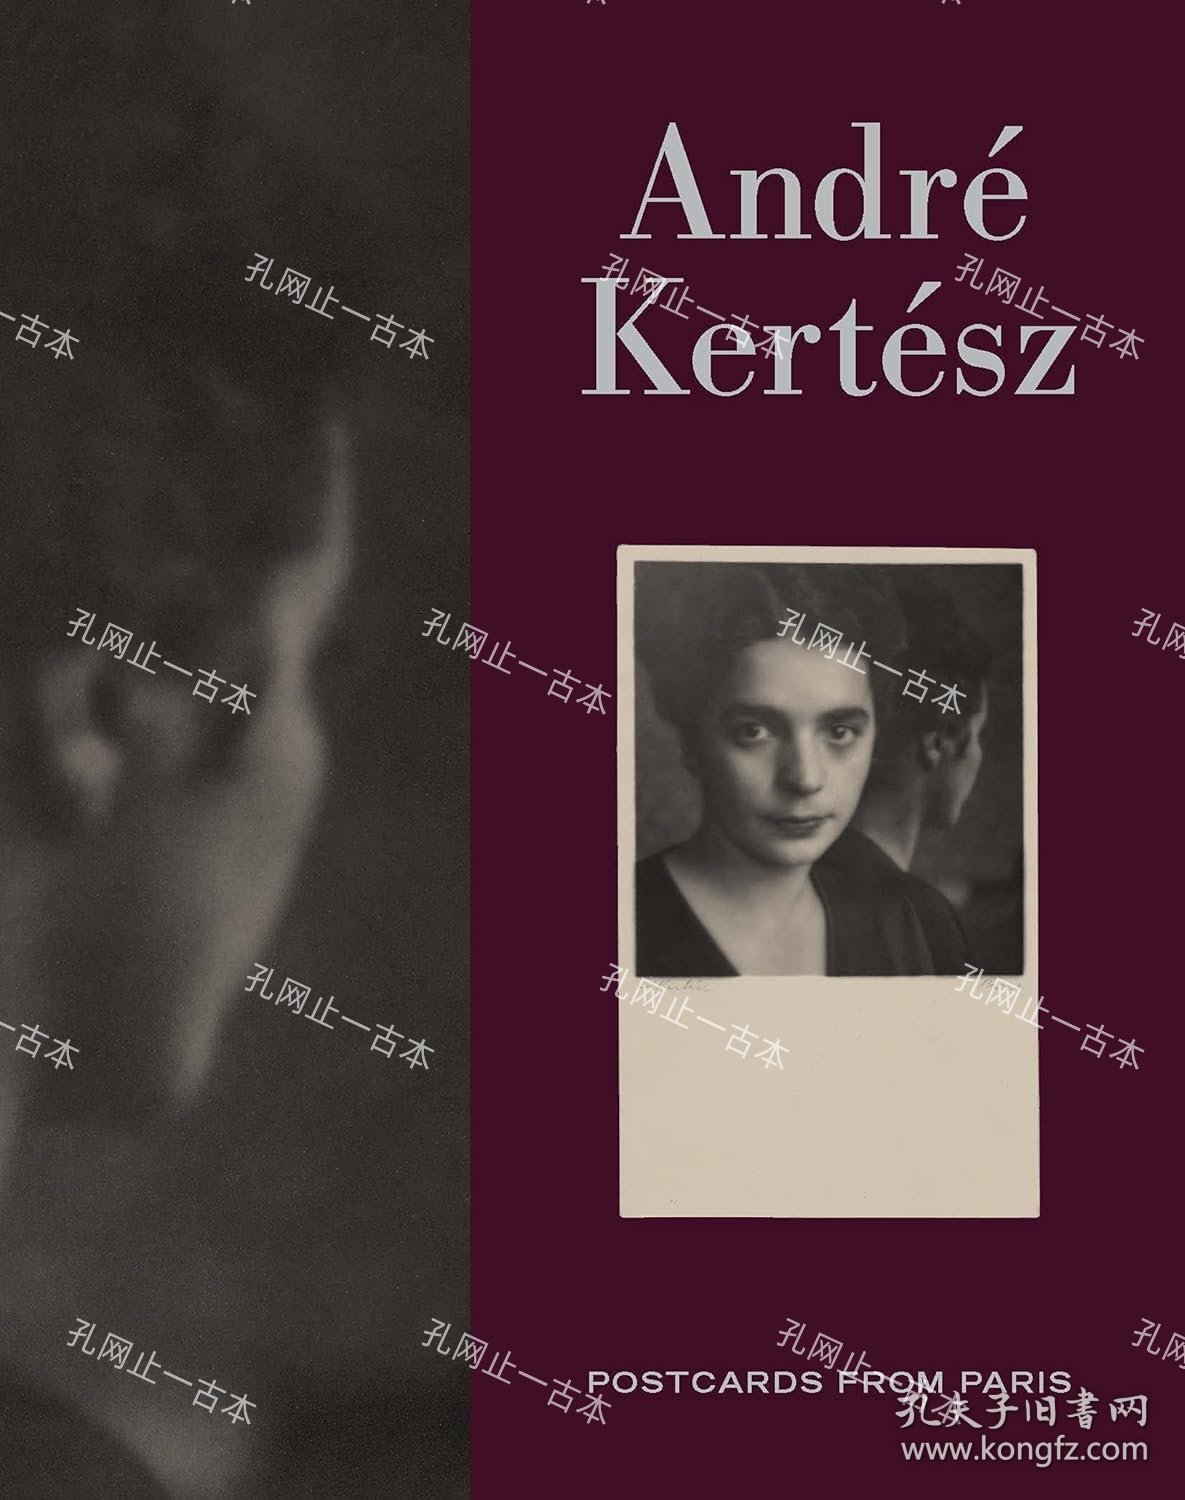 价可议 Andre Kertesz Postcards from Paris nmwznwzn